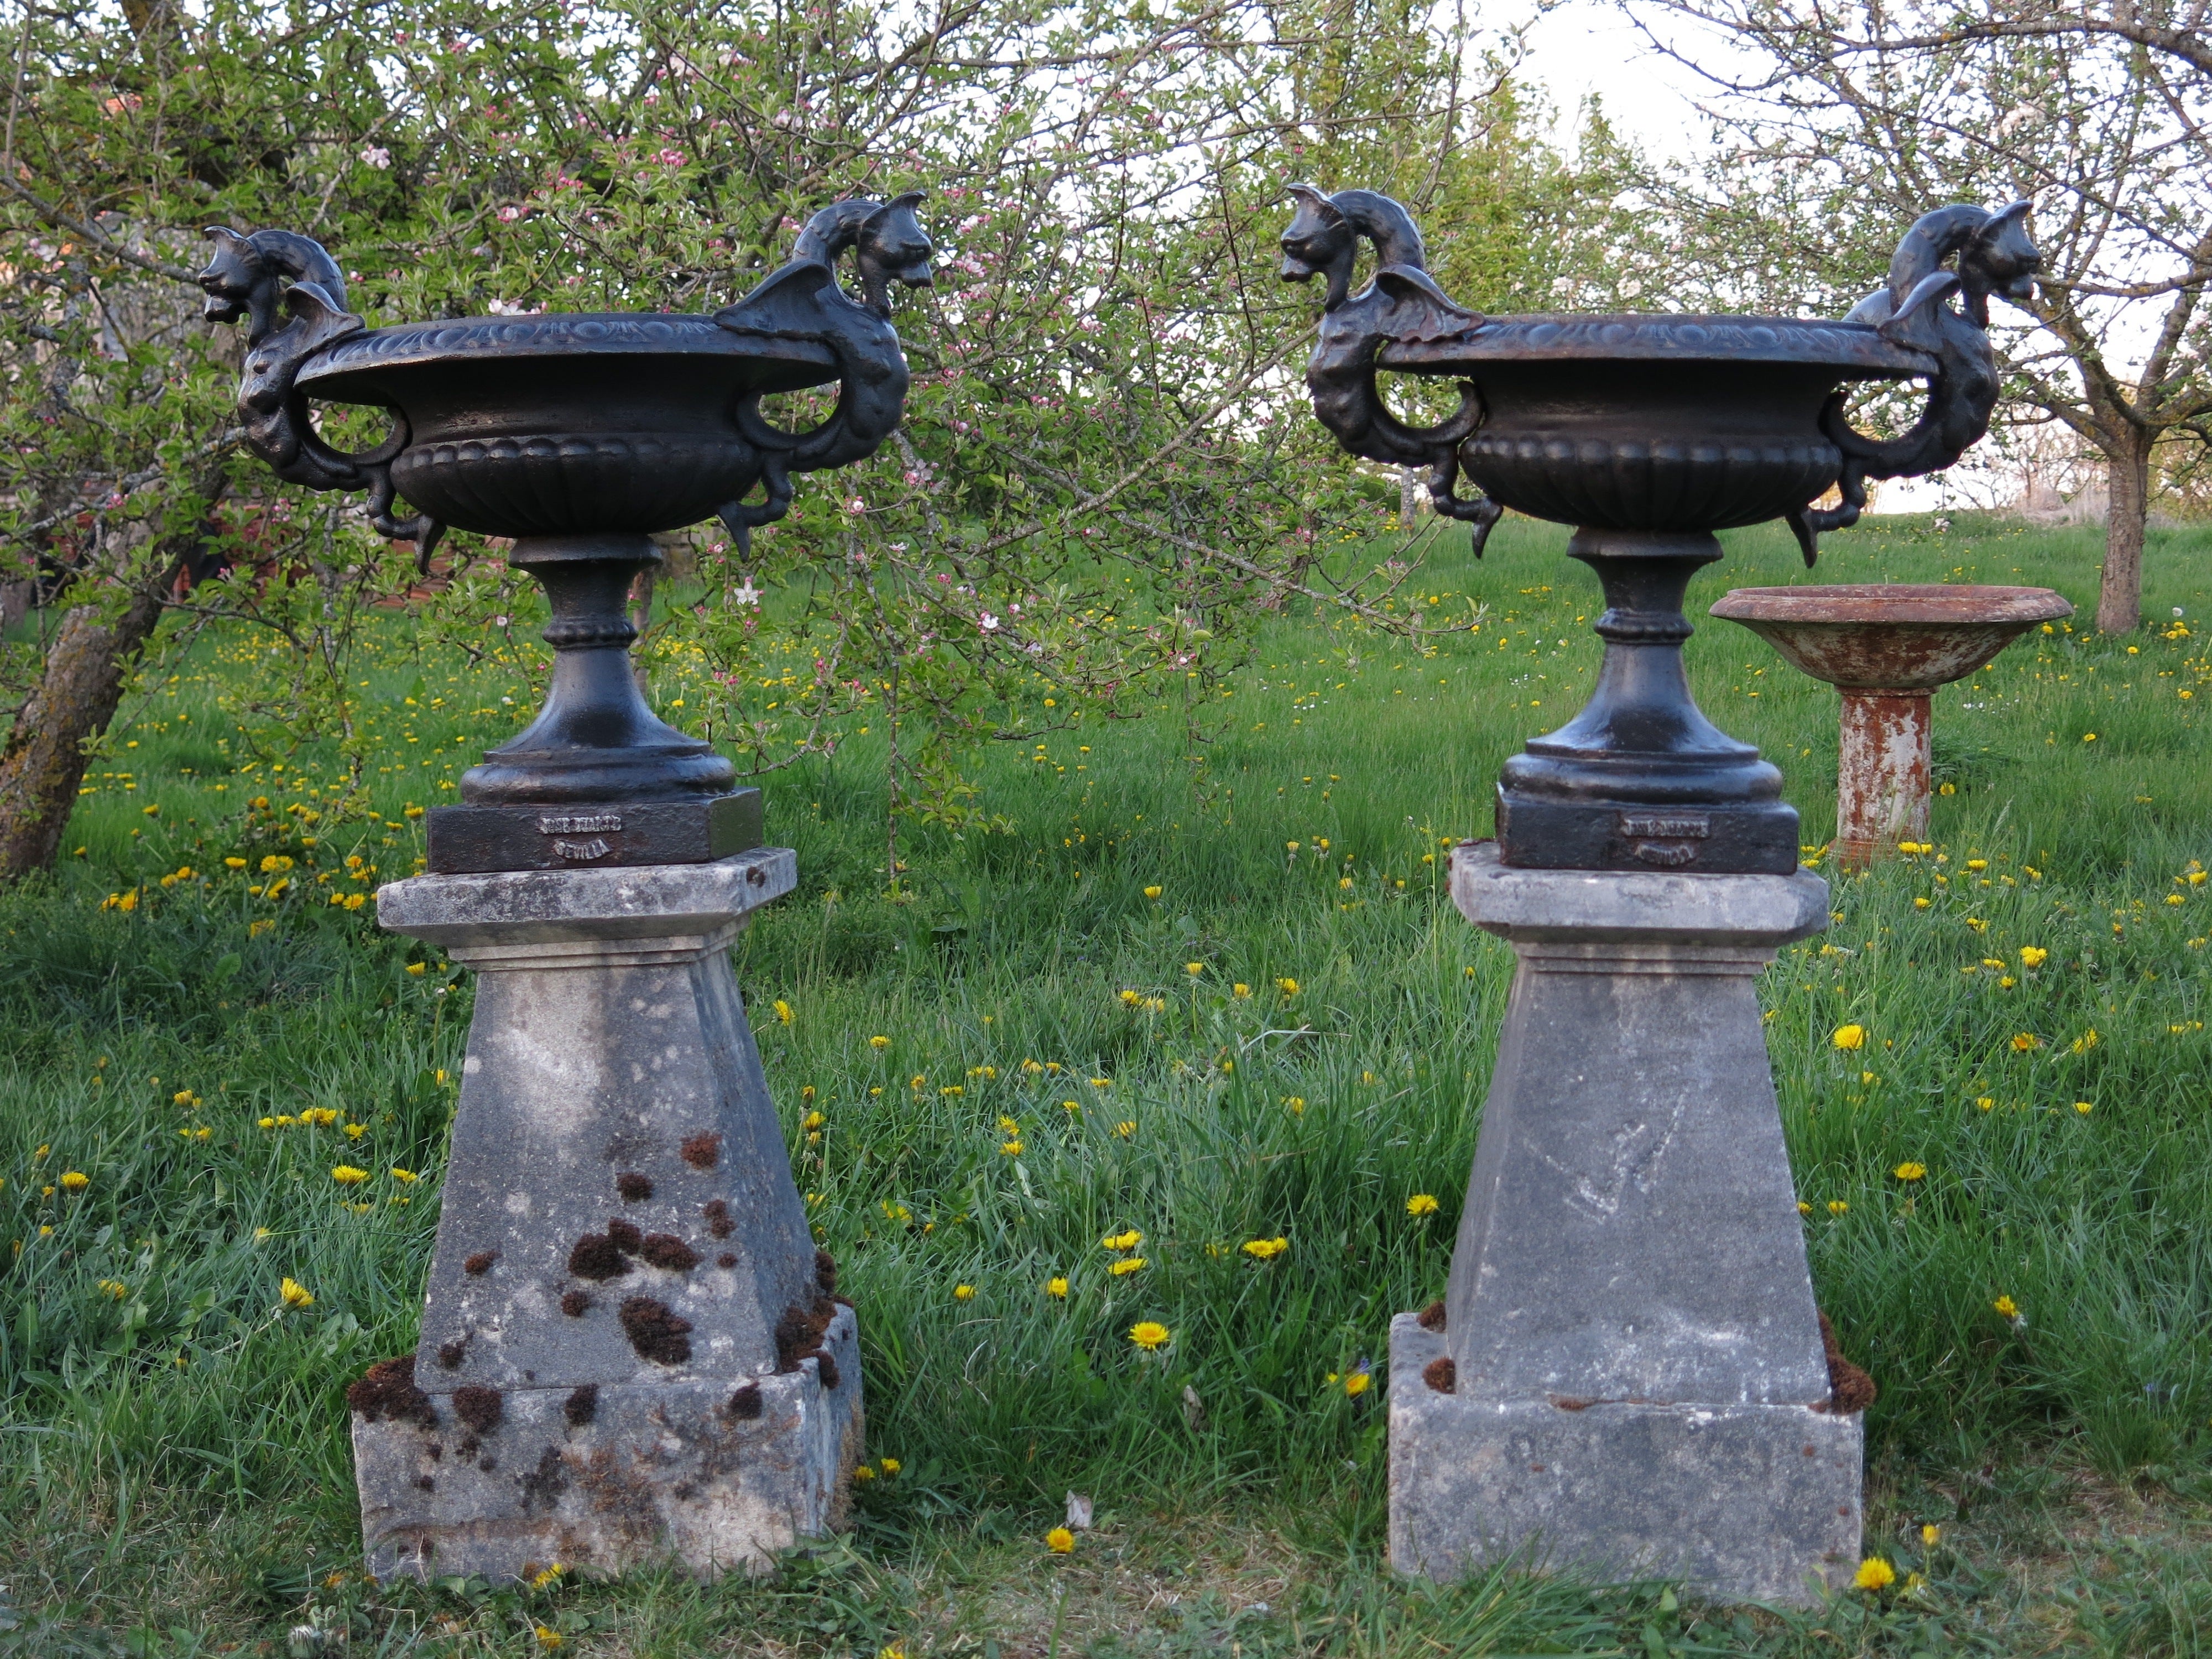 Rare Dragons Vases Iron signed "Jose ... Sevilla" 1800s Limestone Pedestals